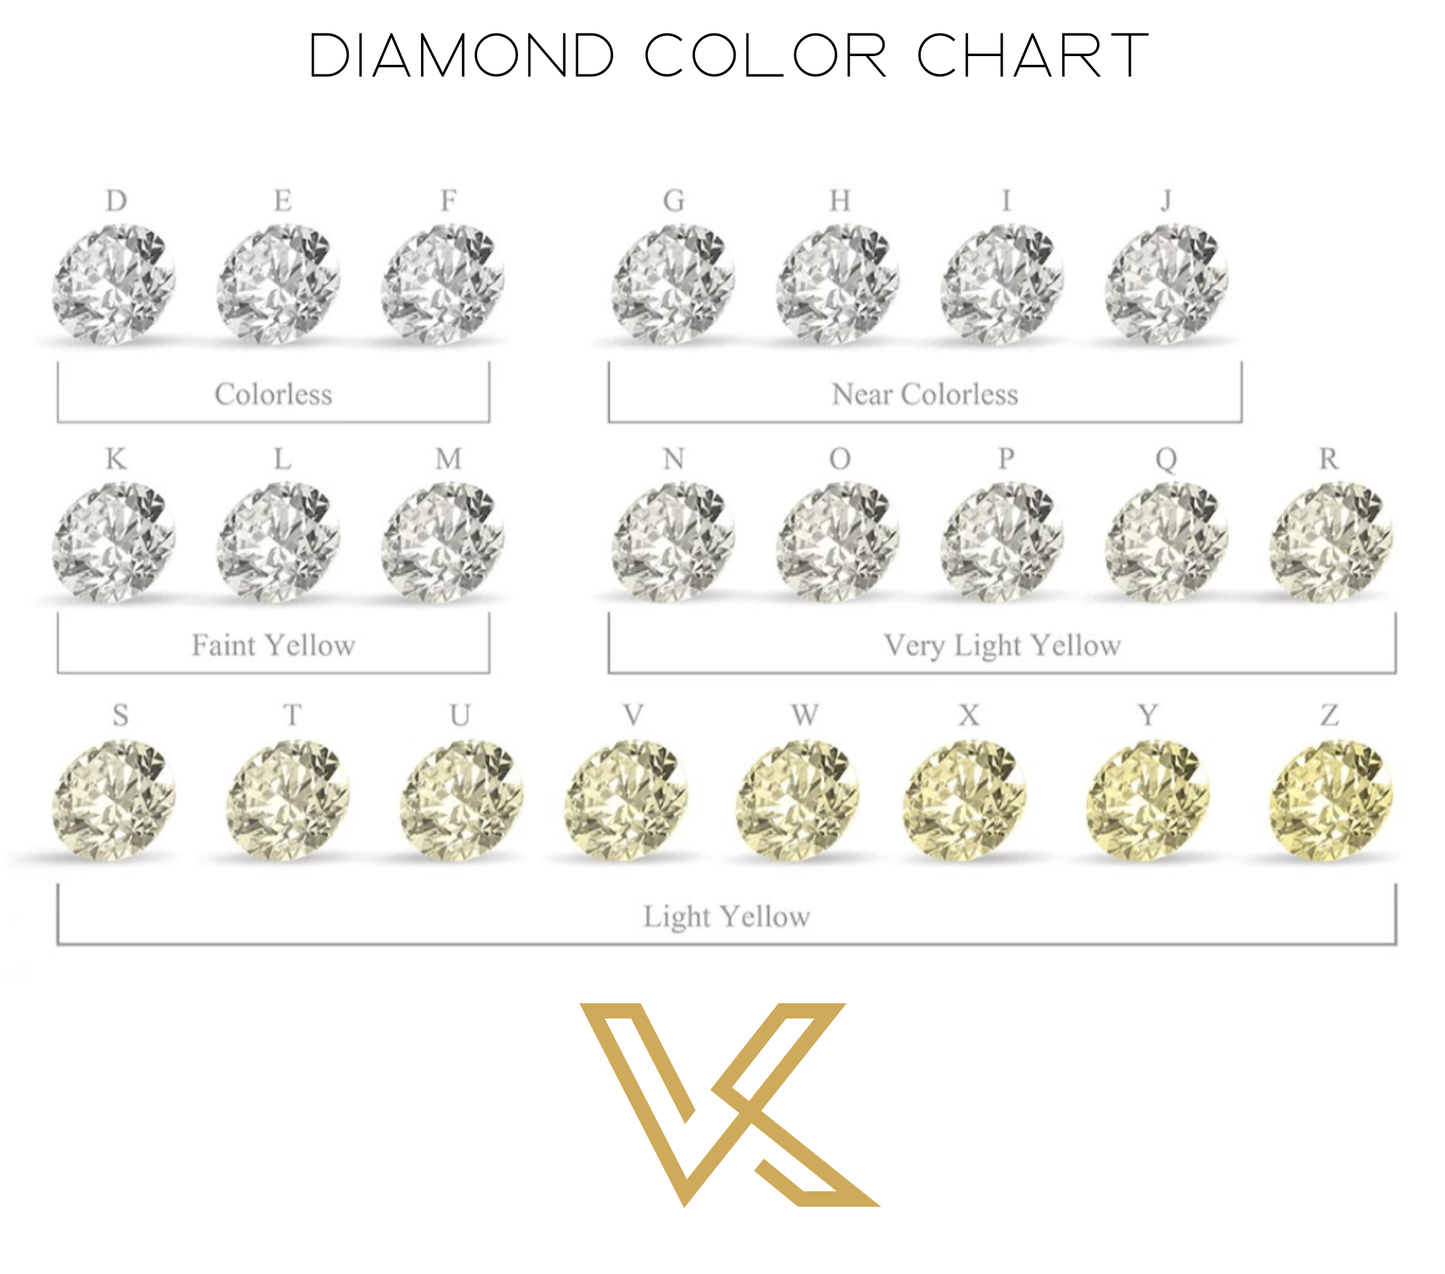 Luxury Diamond Engagement Rings.  5.07 Carat Fancy Yellow Diamond.